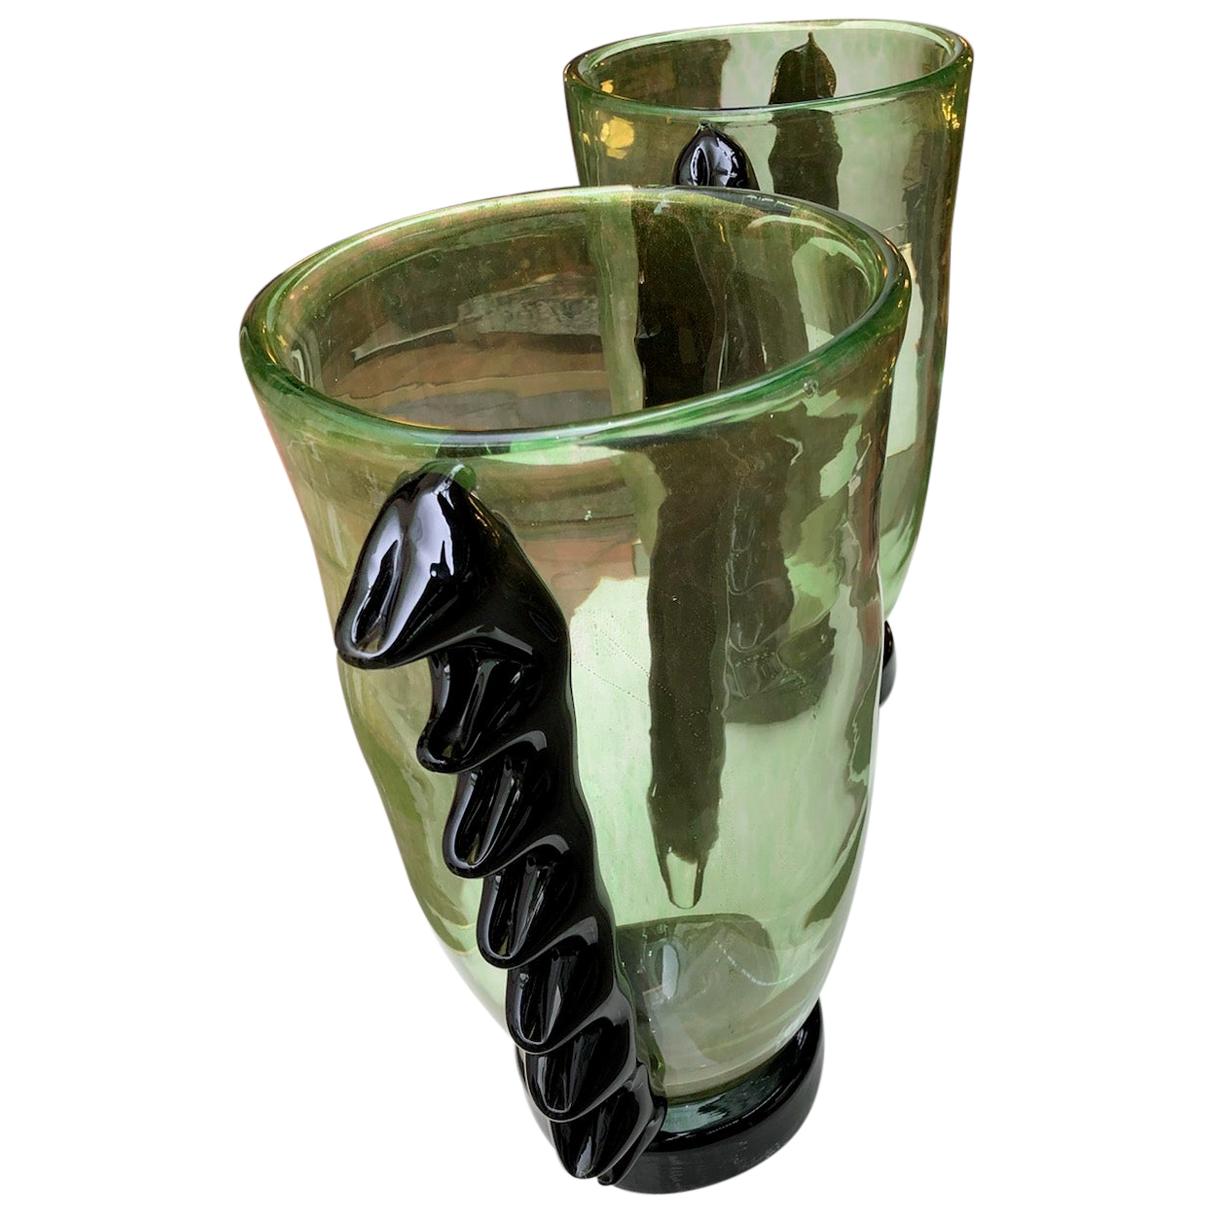 Pair of Vases in Murano Glass Signed “Costantini Murano”